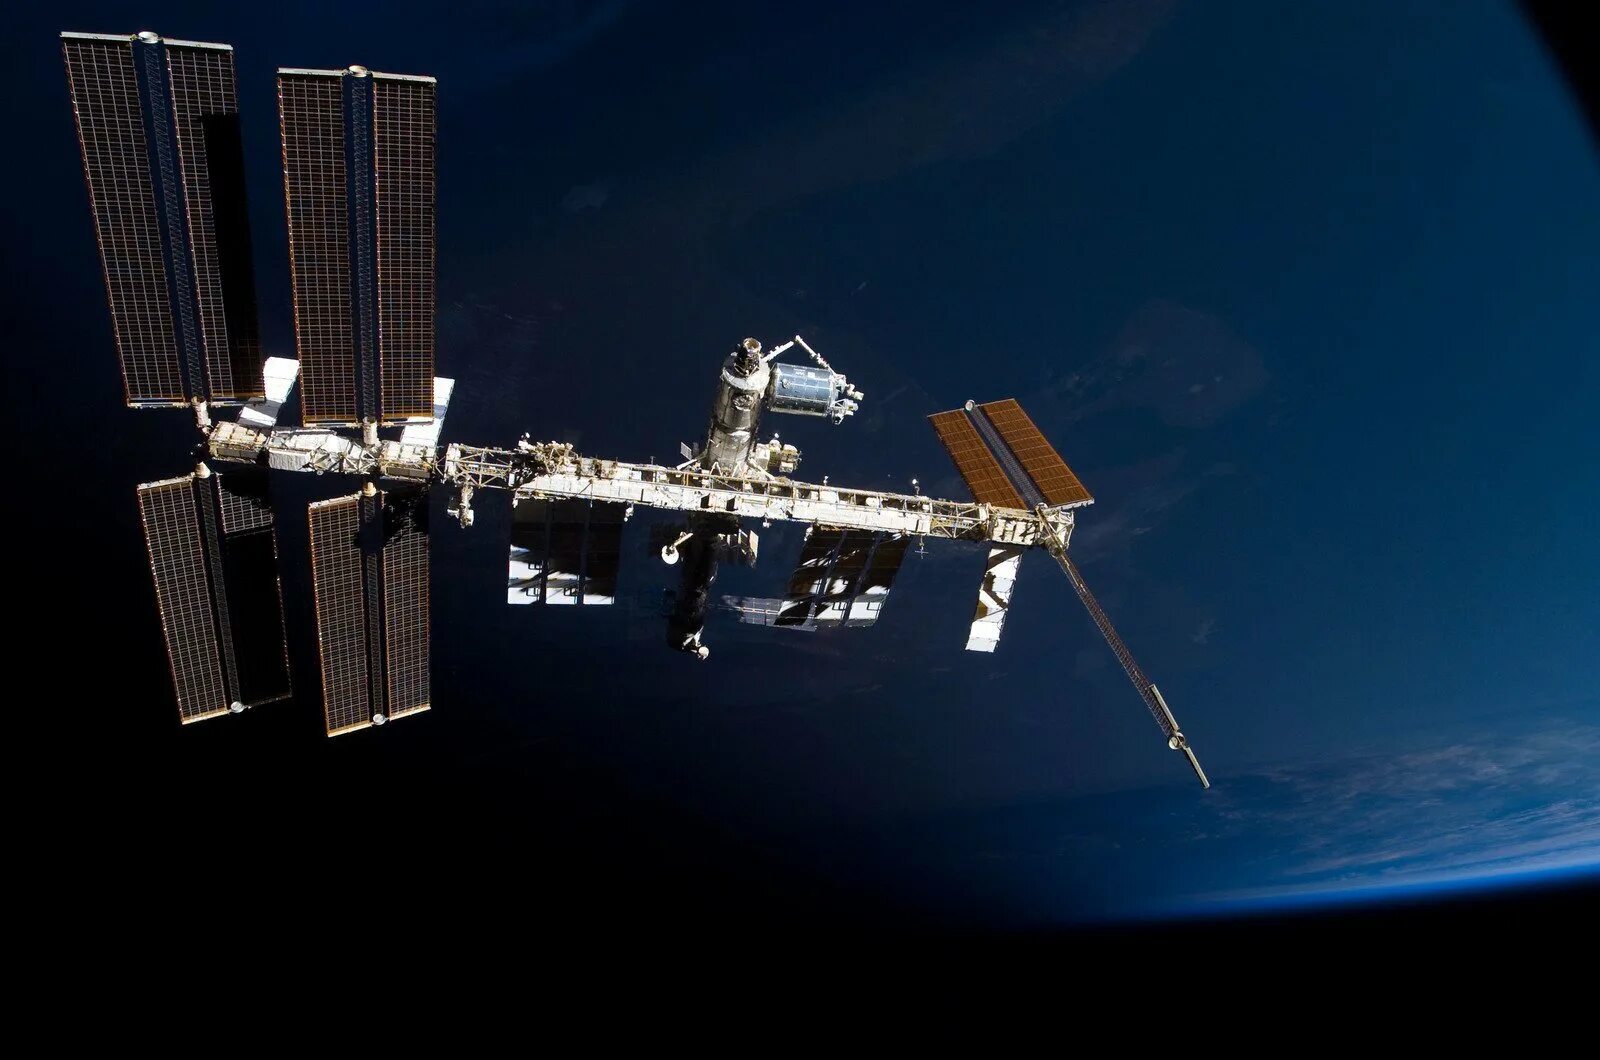 Международная станция мир. Космическая станция МКС. Спутник НАСА станция МКС. Космическая орбитальная станция мир. Атлантис космический аппарат.